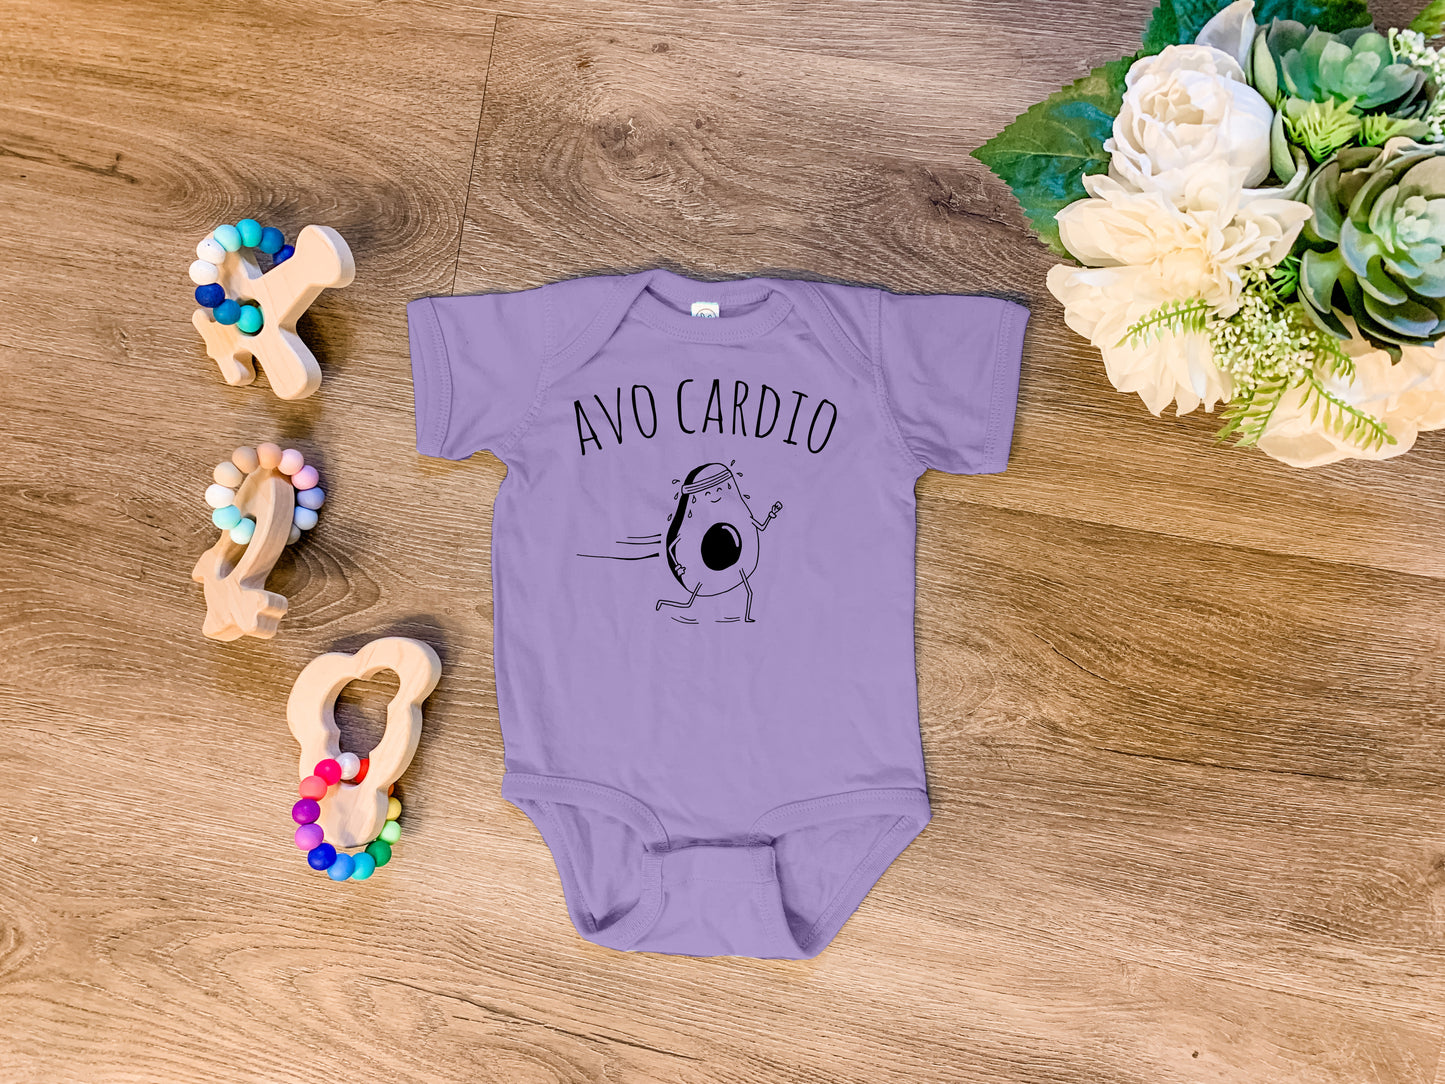 Avo Cardio (Avocado) - Onesie - Heather Gray, Chill, or Lavender